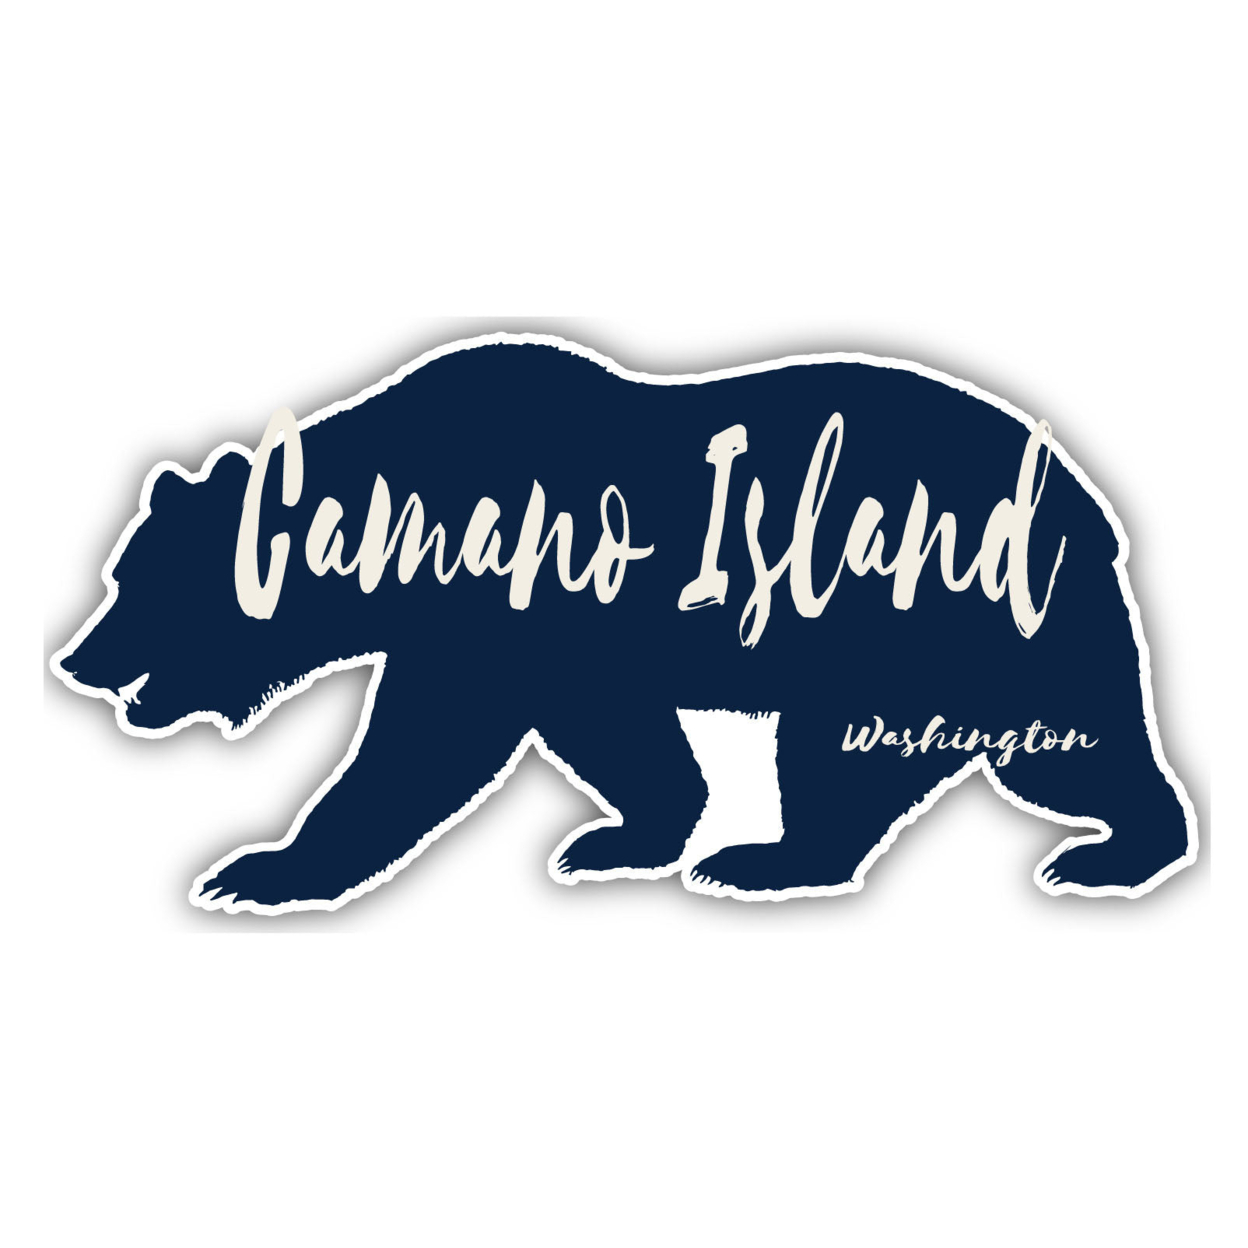 Camano Island Washington Souvenir Decorative Stickers (Choose Theme And Size) - Single Unit, 12-Inch, Tent